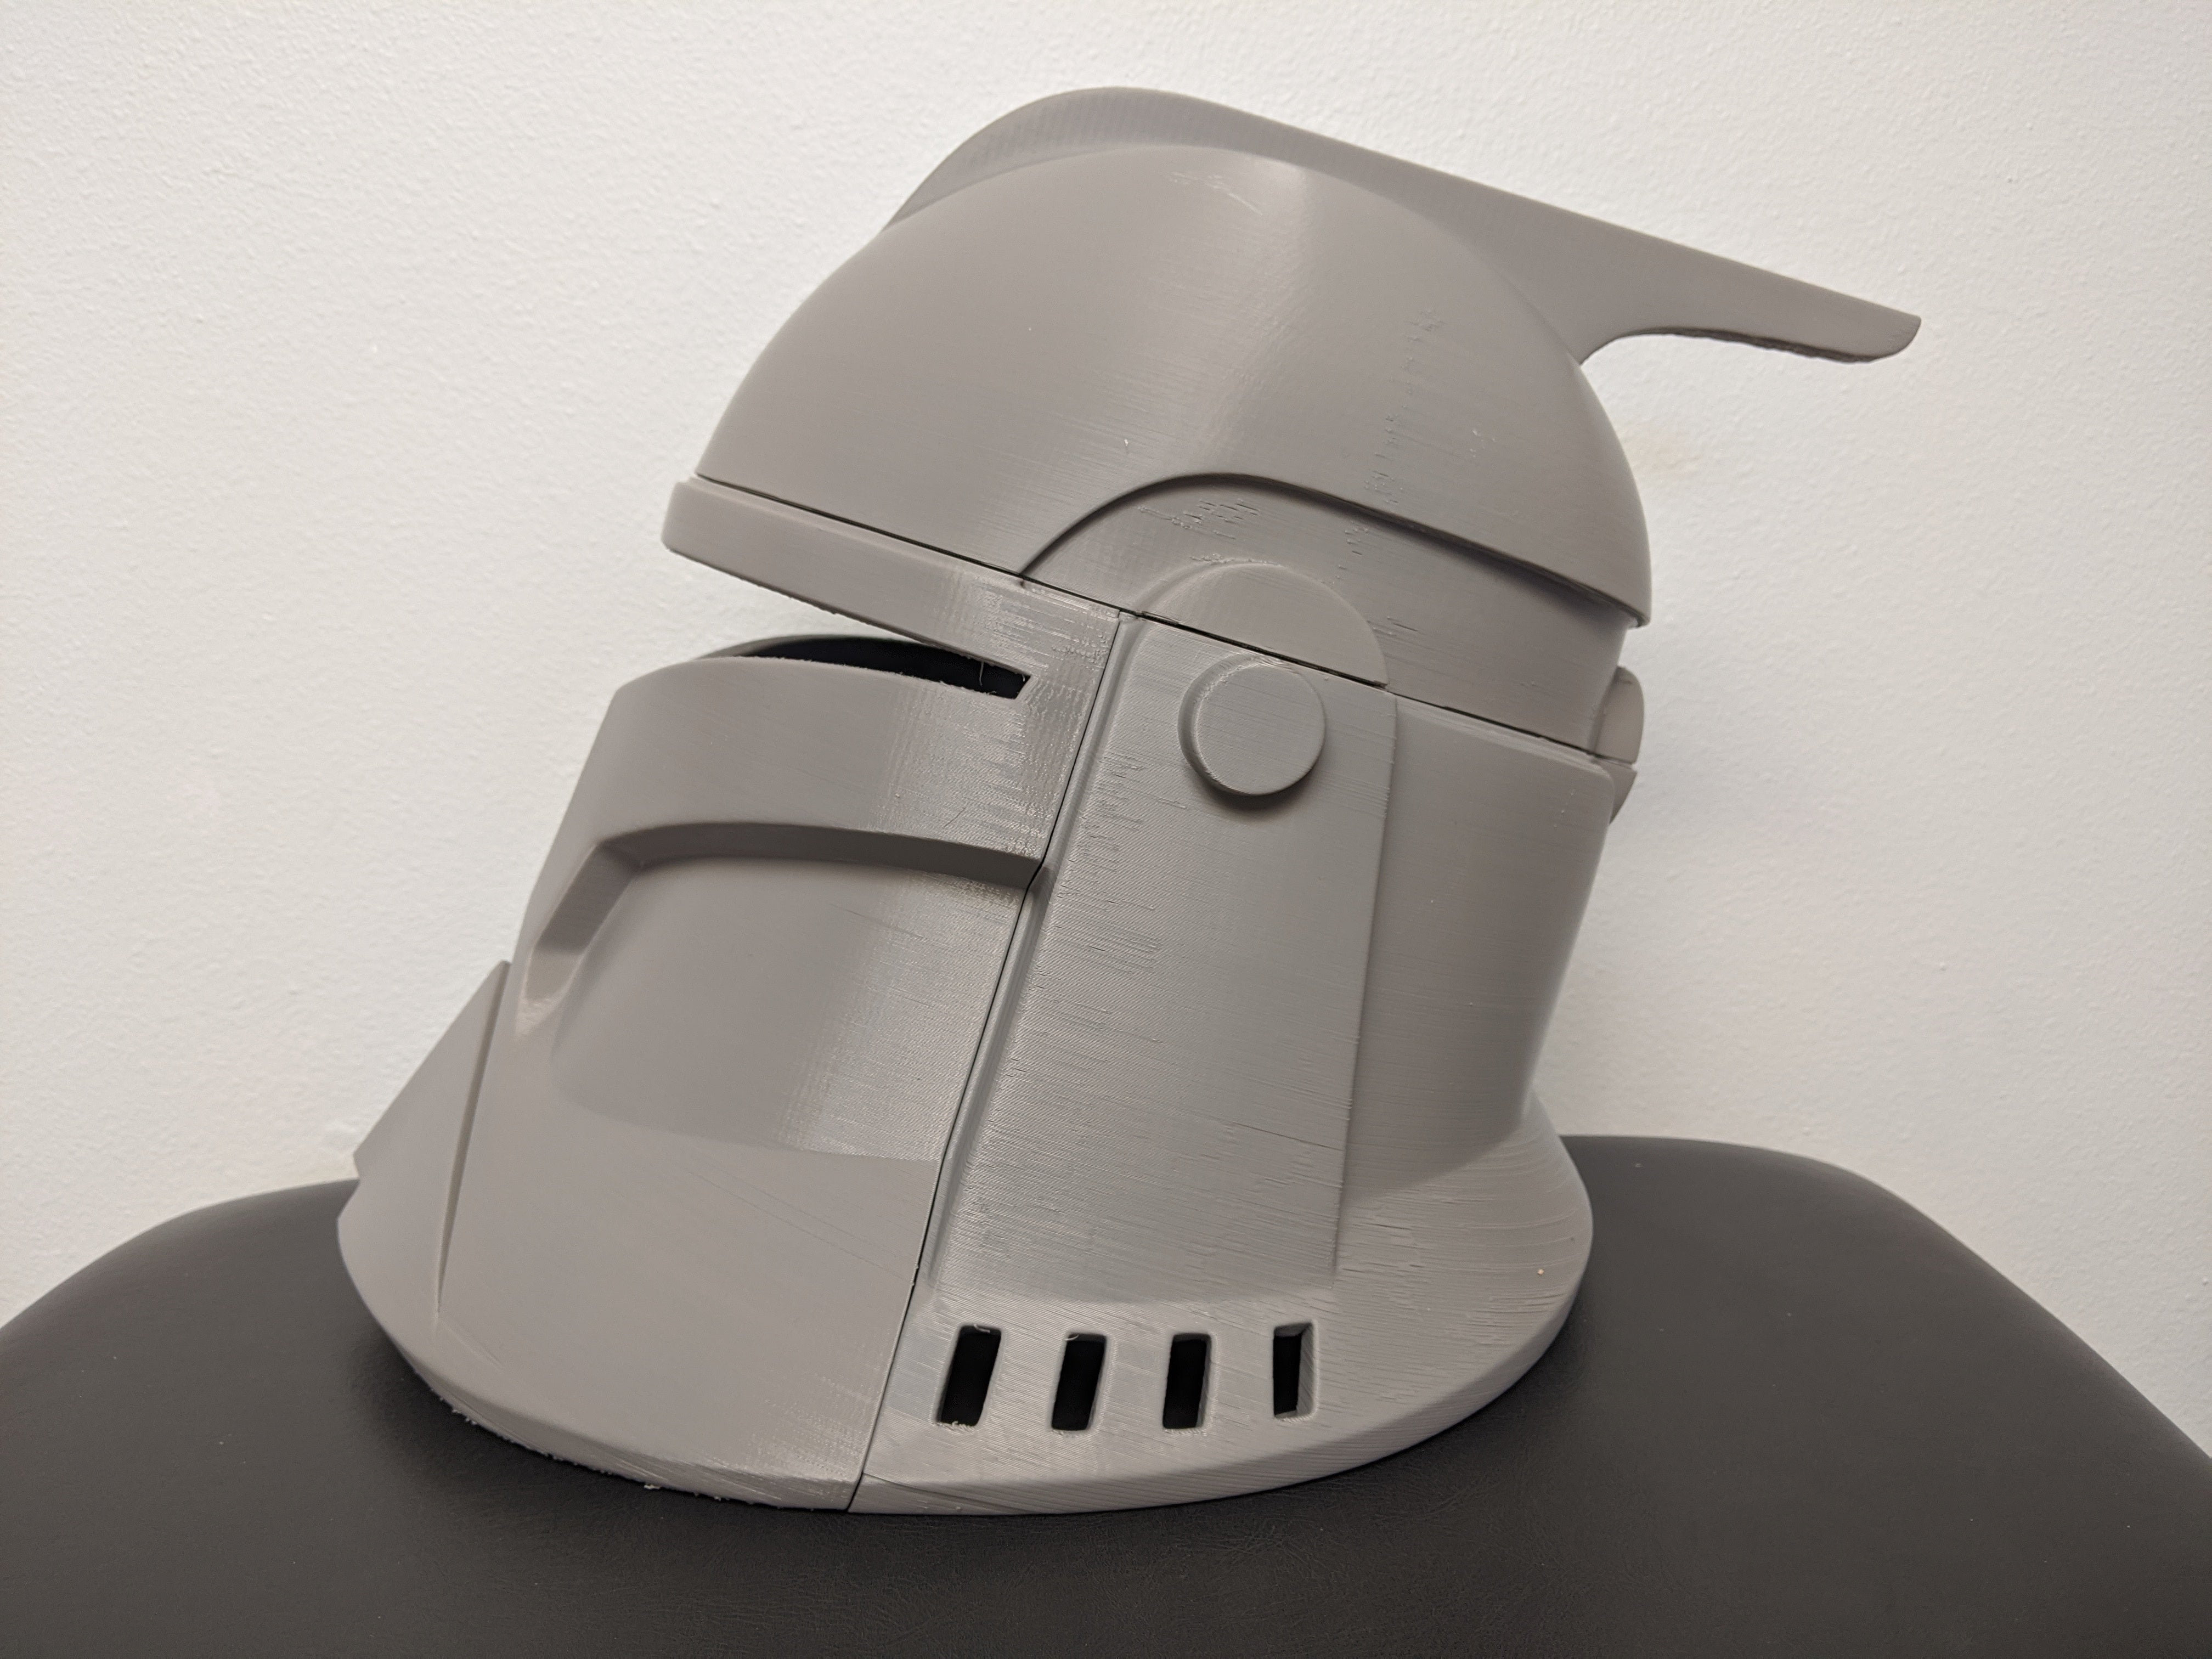 Animated Phase 1 Clone Trooper Helmet - DIY - Galactic Armory